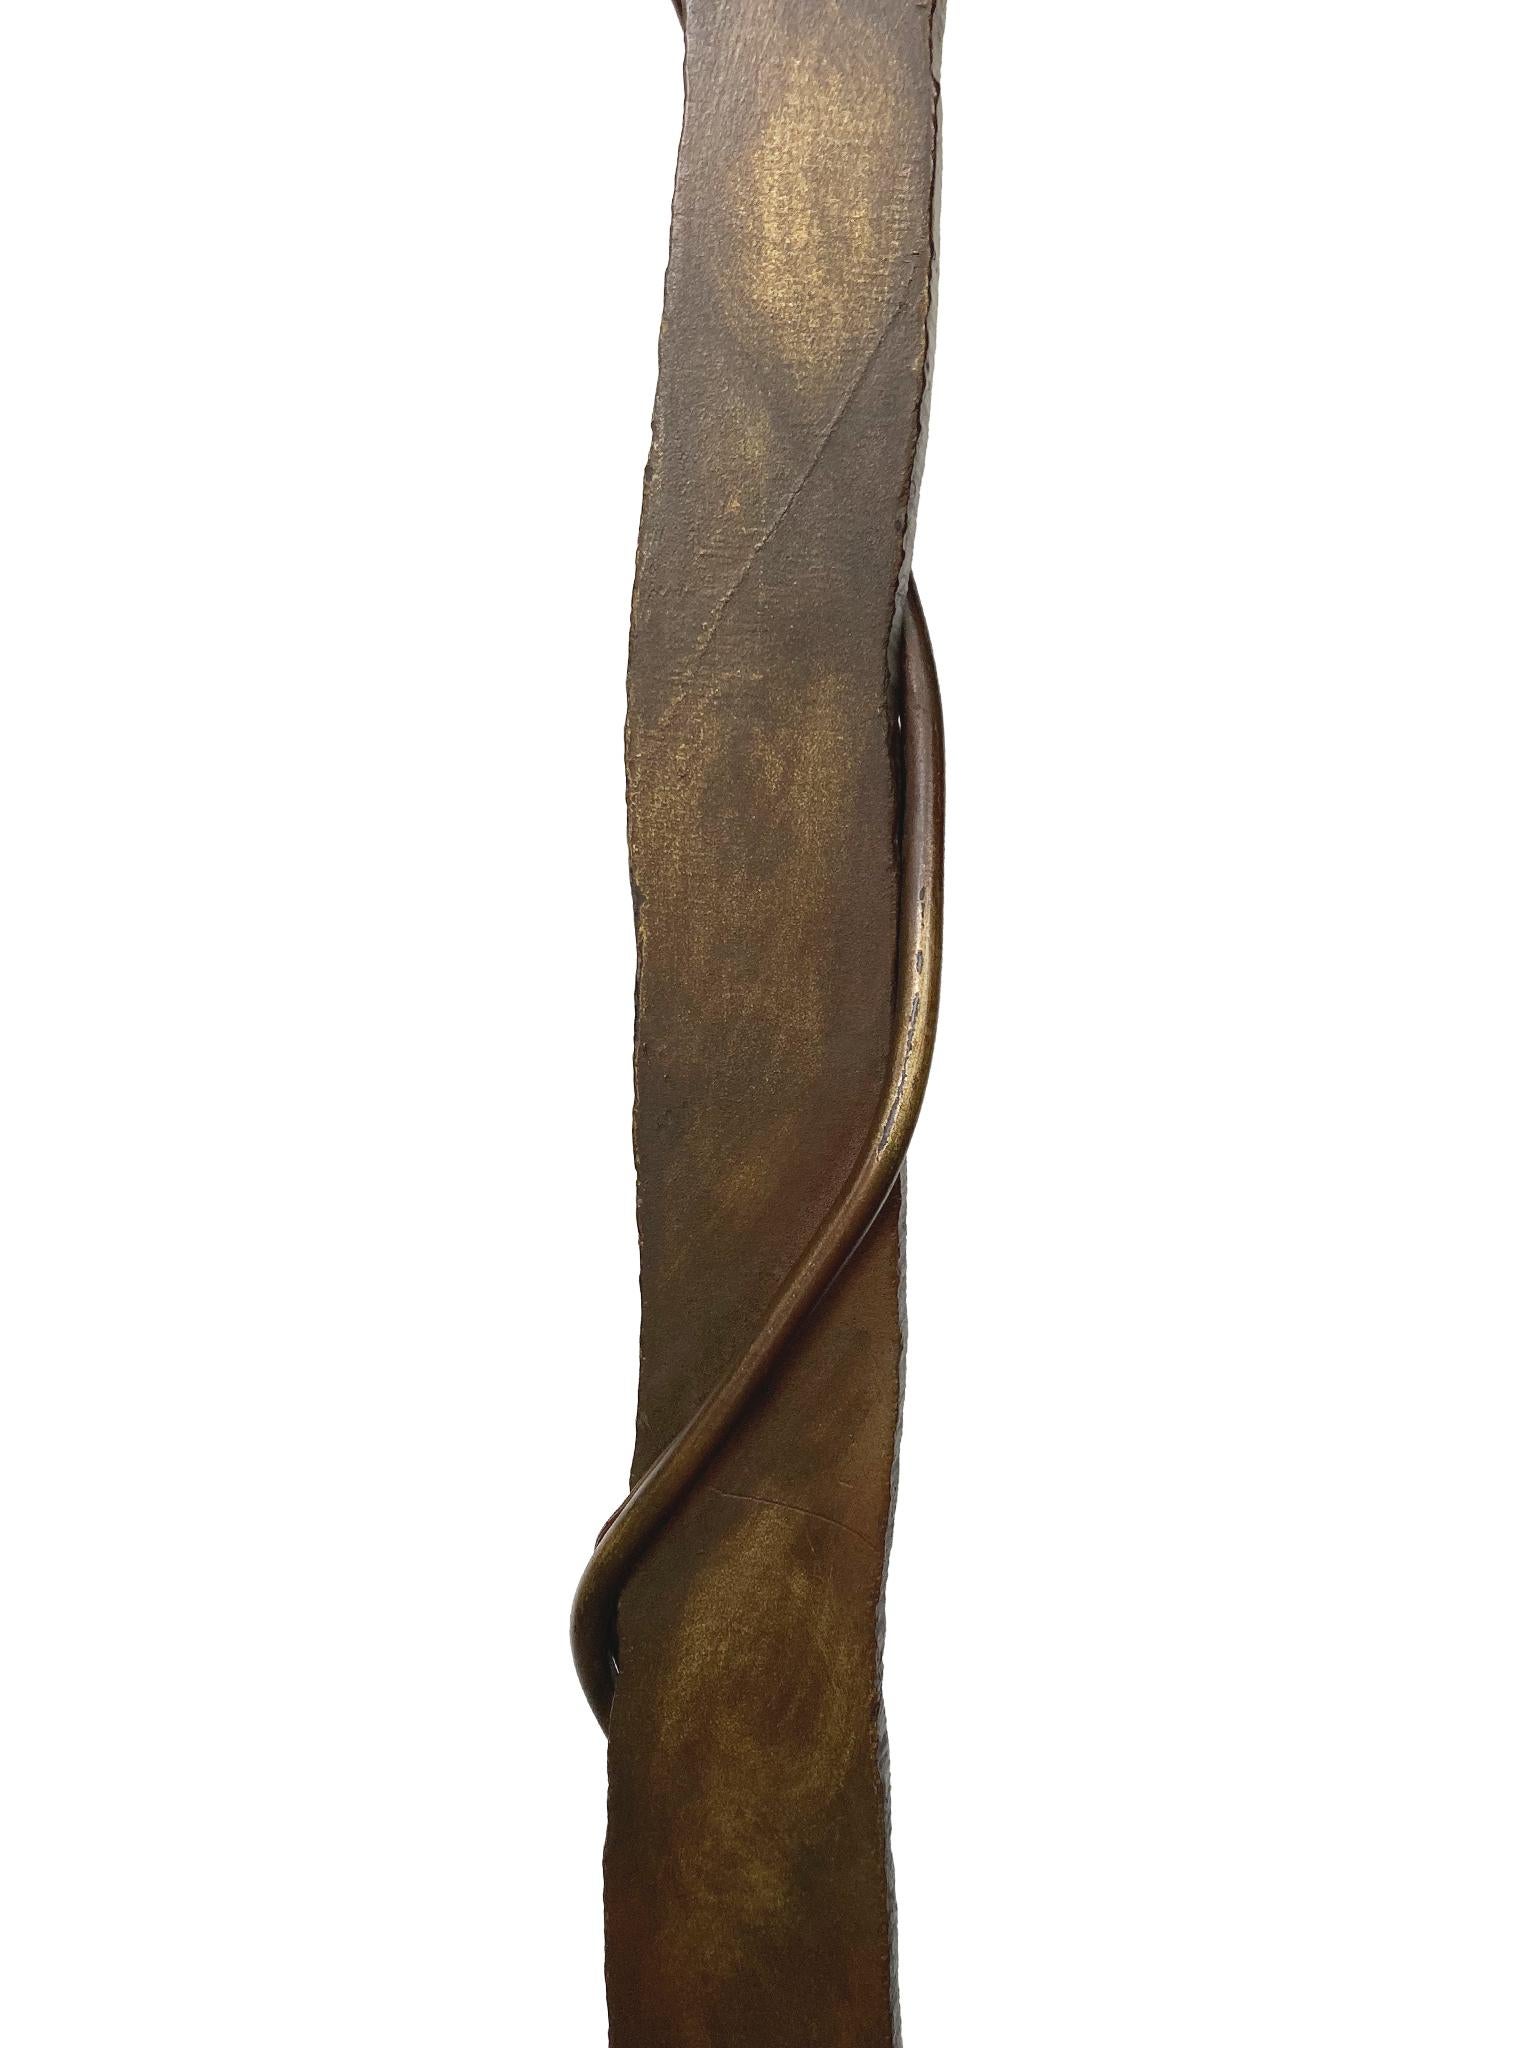 Giacometti-Style Bronze Floor Lamp 6